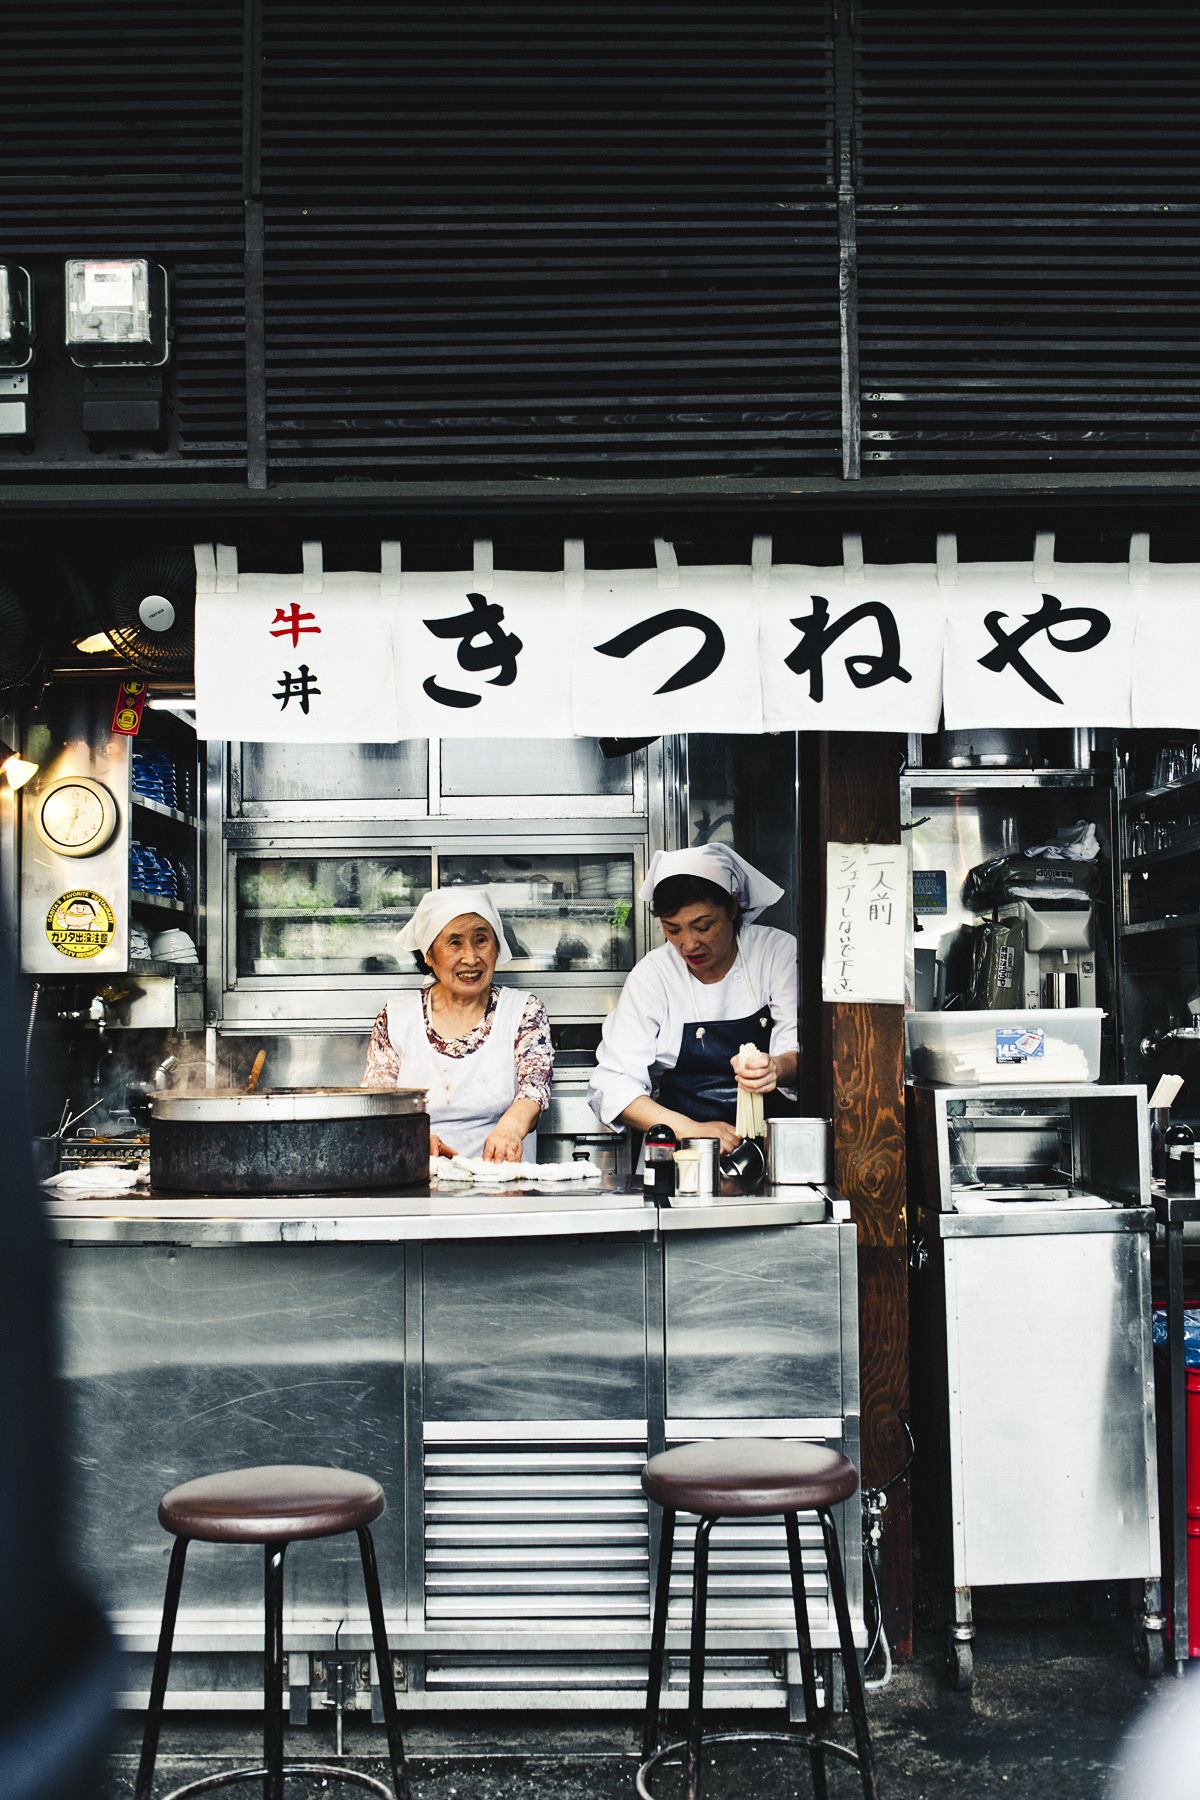 Japanese food vendors in fish market area